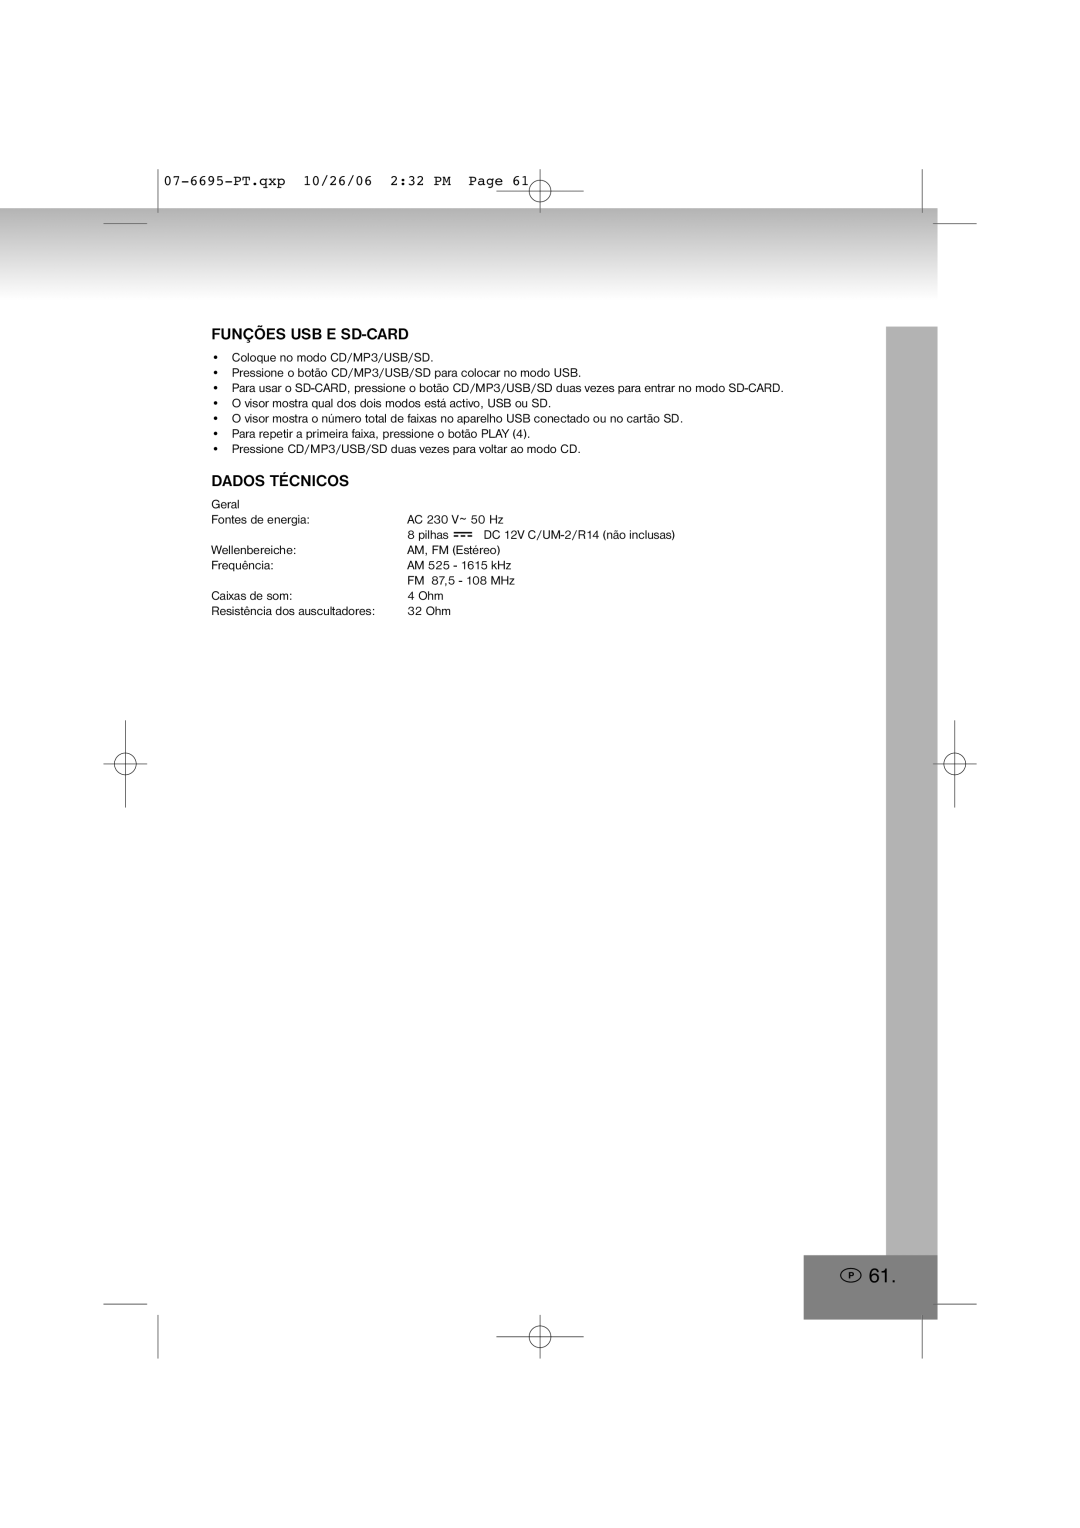 Elta manual Funções Usb E Sd-Card, Dados Técnicos, 07-6695-PT.qxp10/26/06 2 32 PM Page 